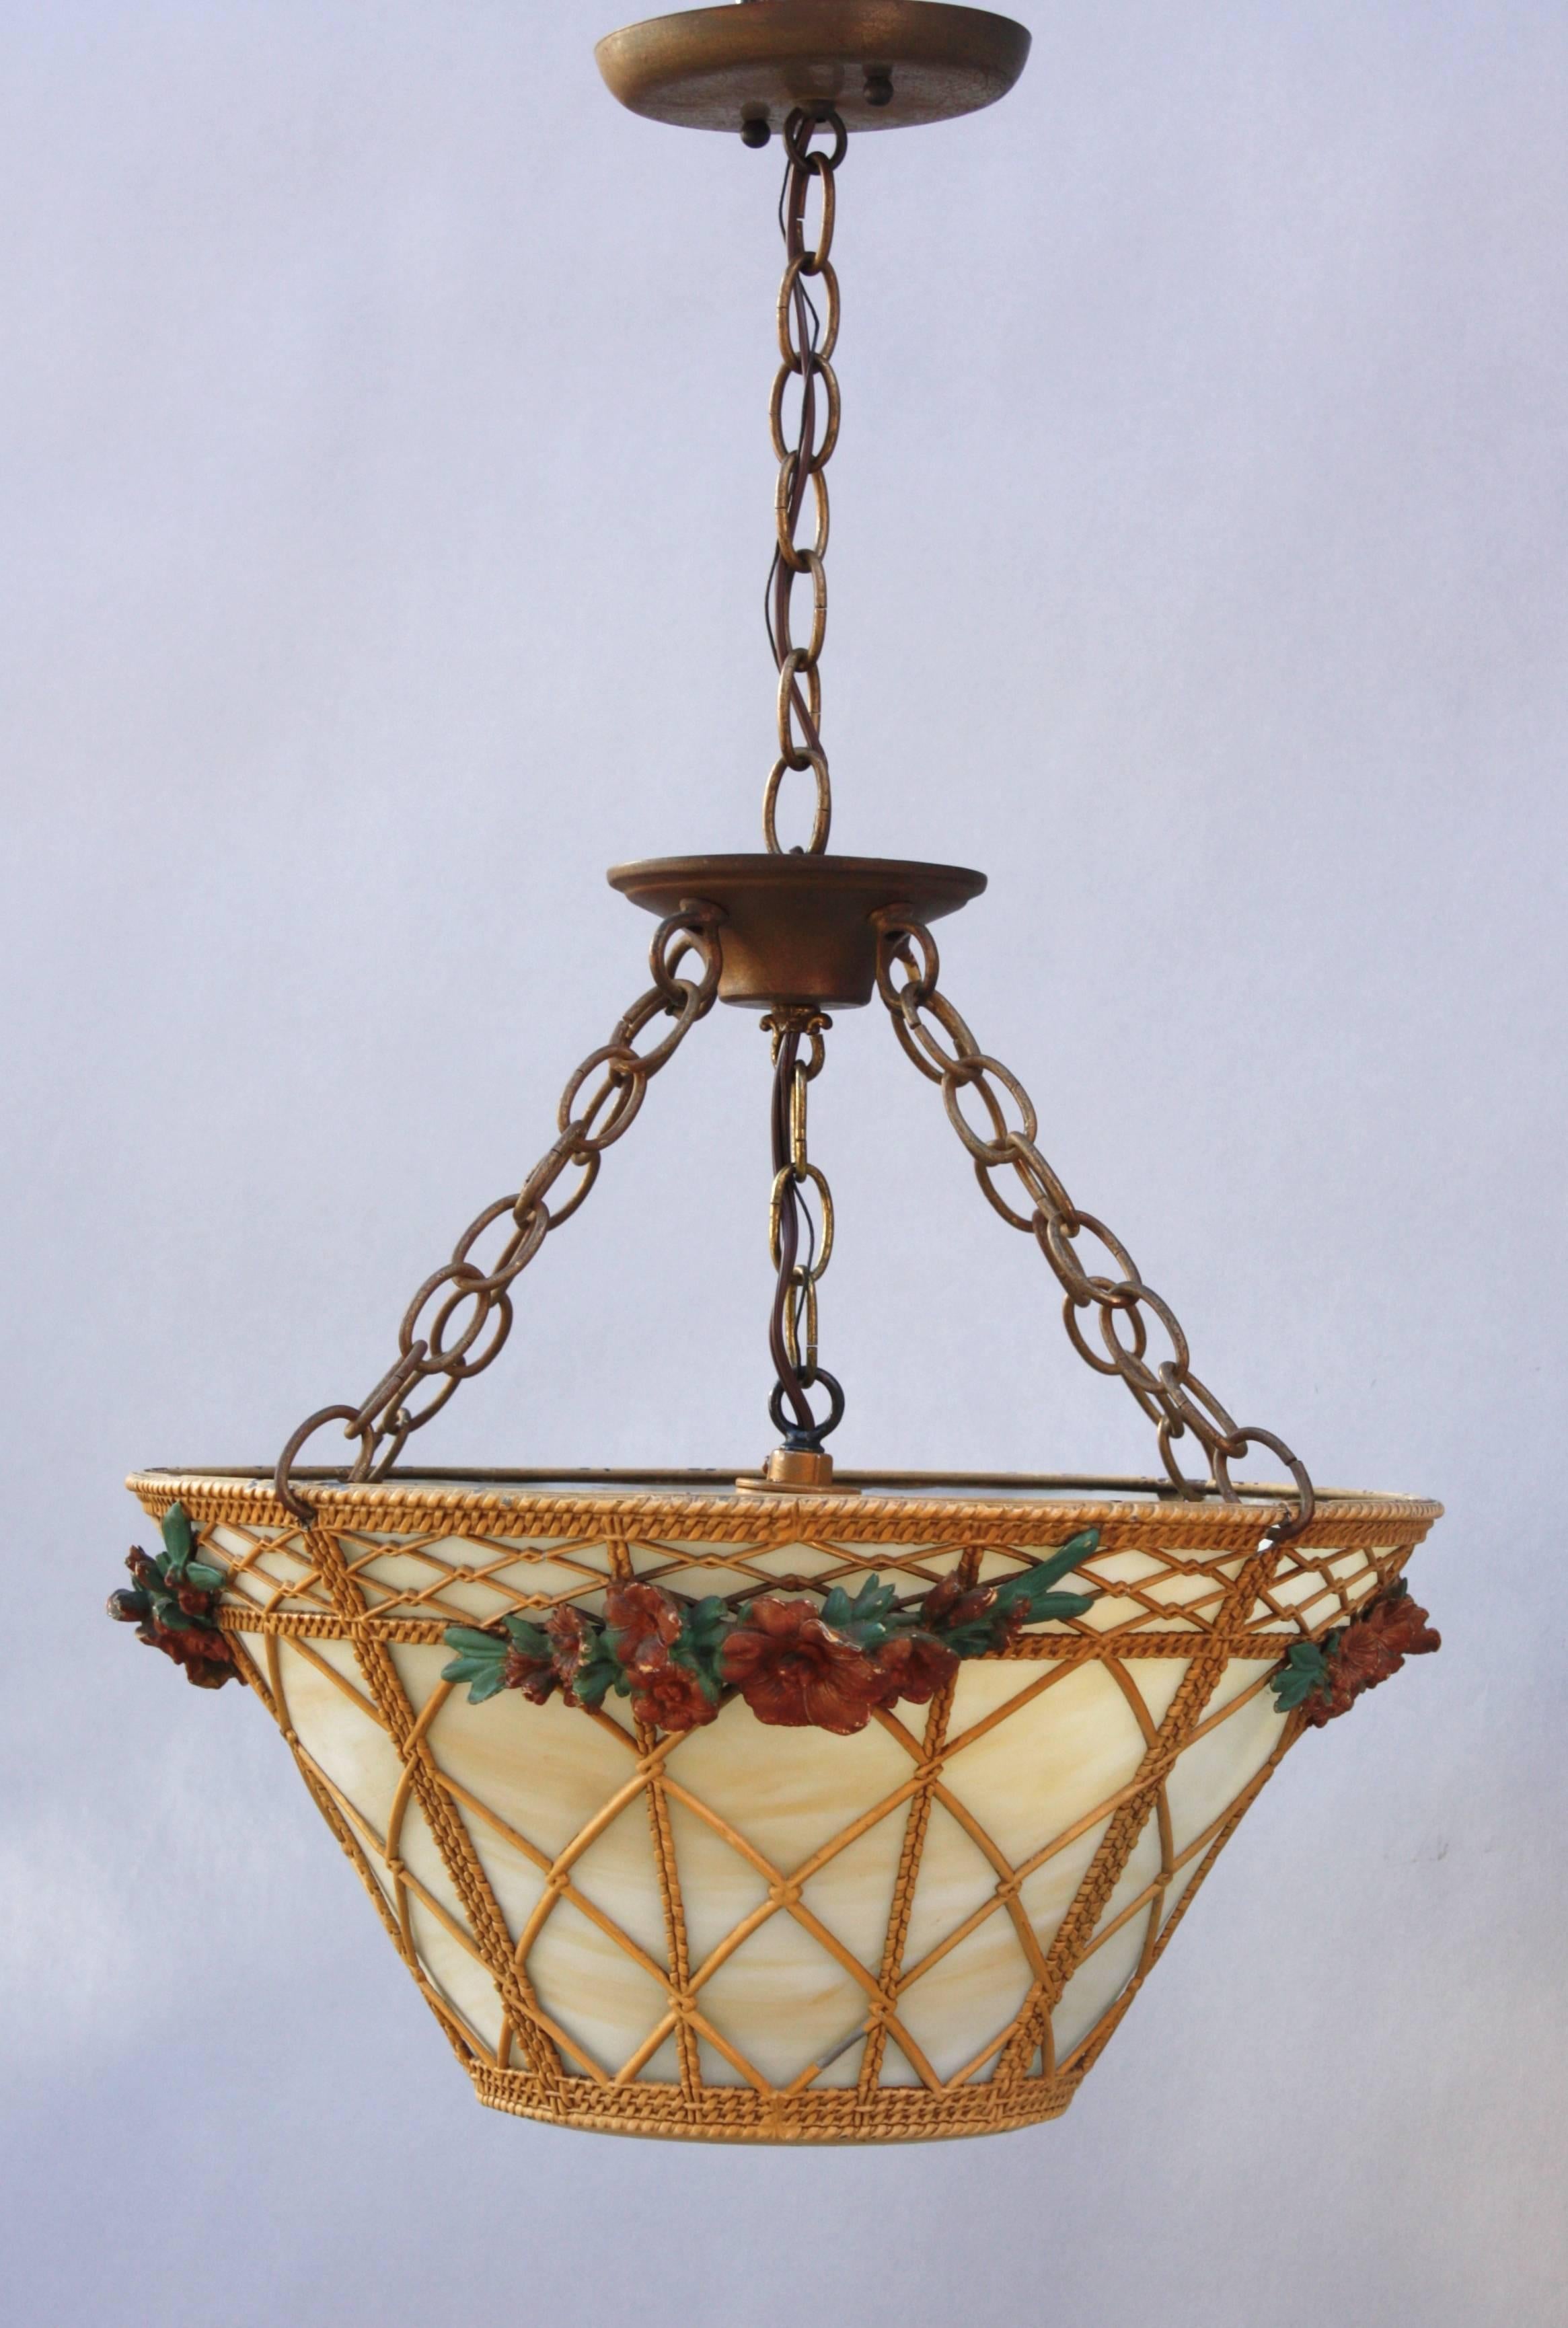 Unusual 1930s pendant designed as a flower basket. Features caramel colored milk glass.